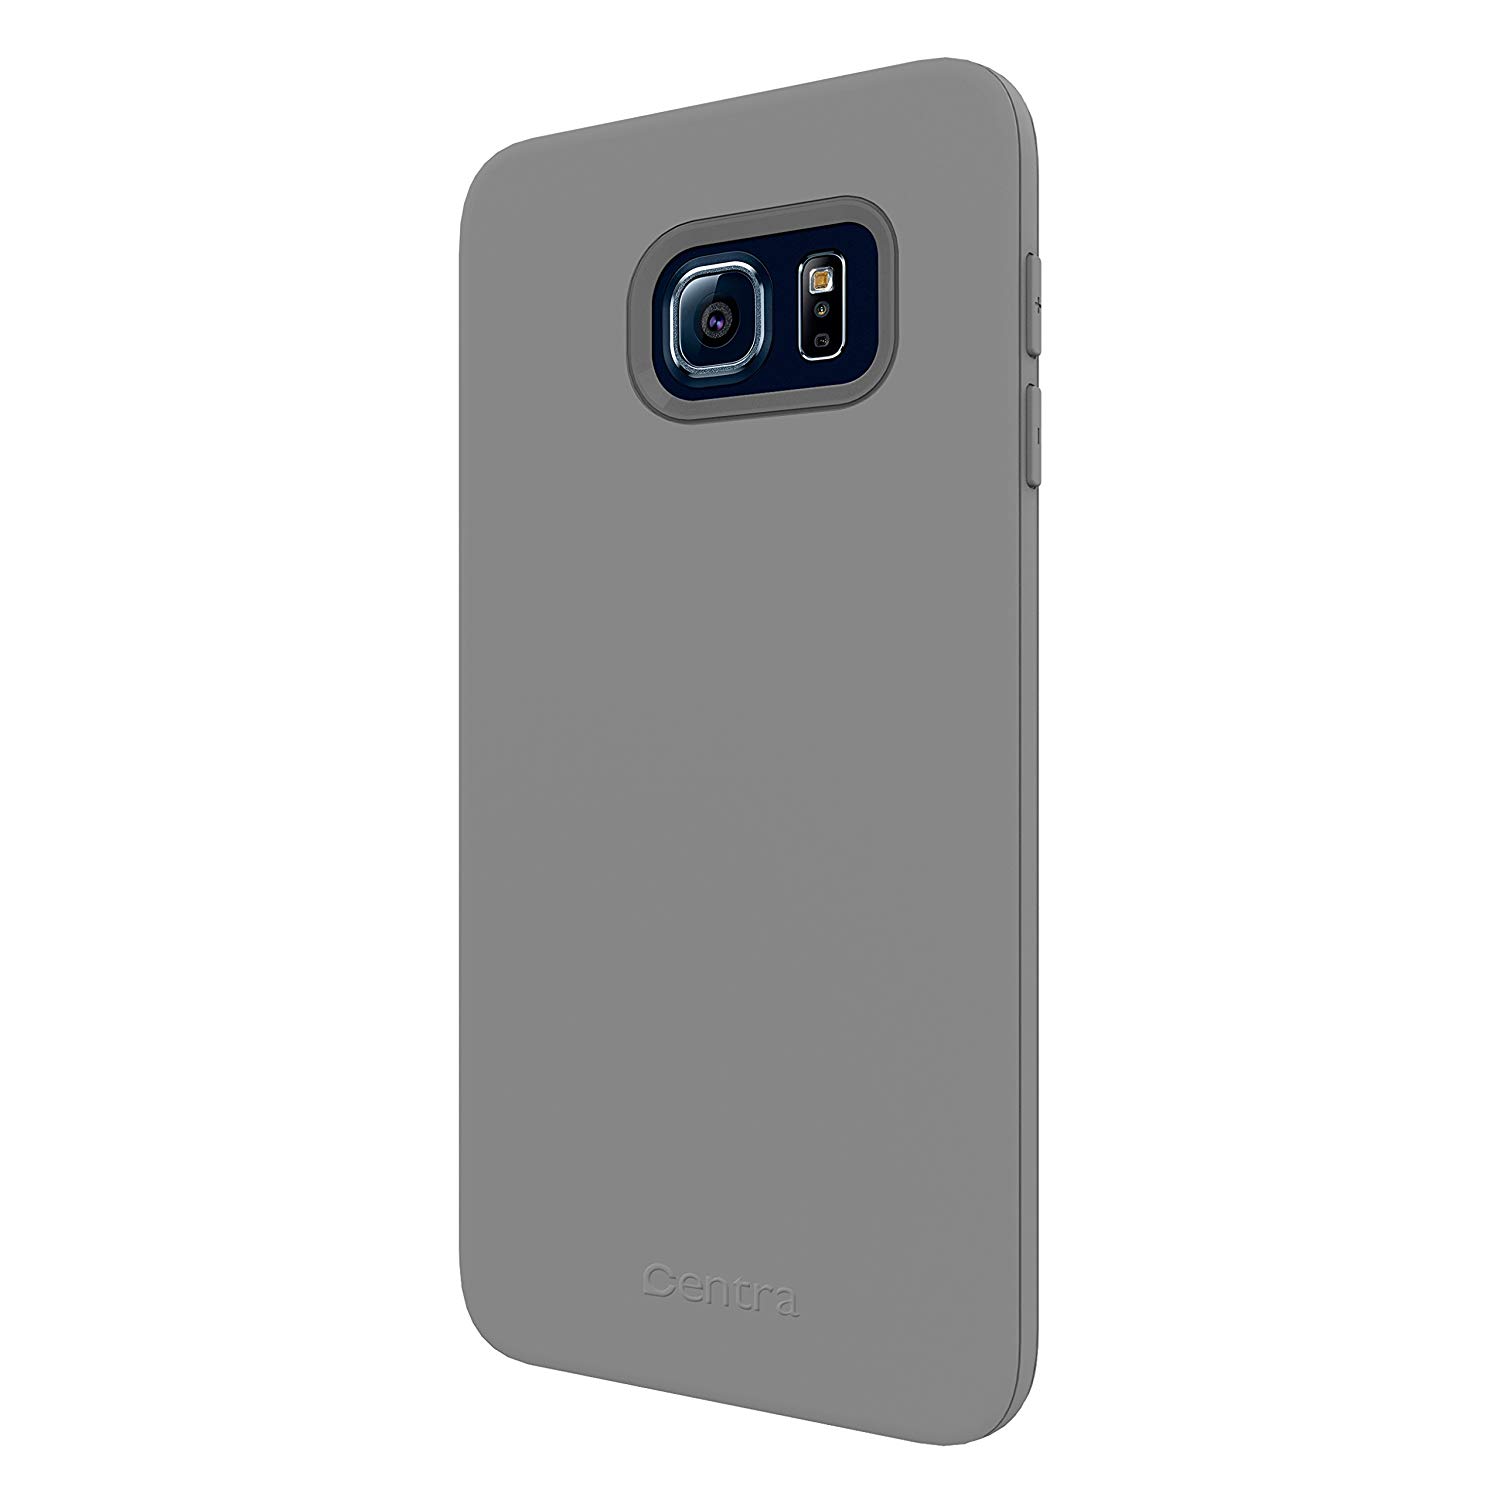 Galaxy S6 Edge Plus Case, Centra TPU Case for Galaxy S6 Edge Plus [1.5